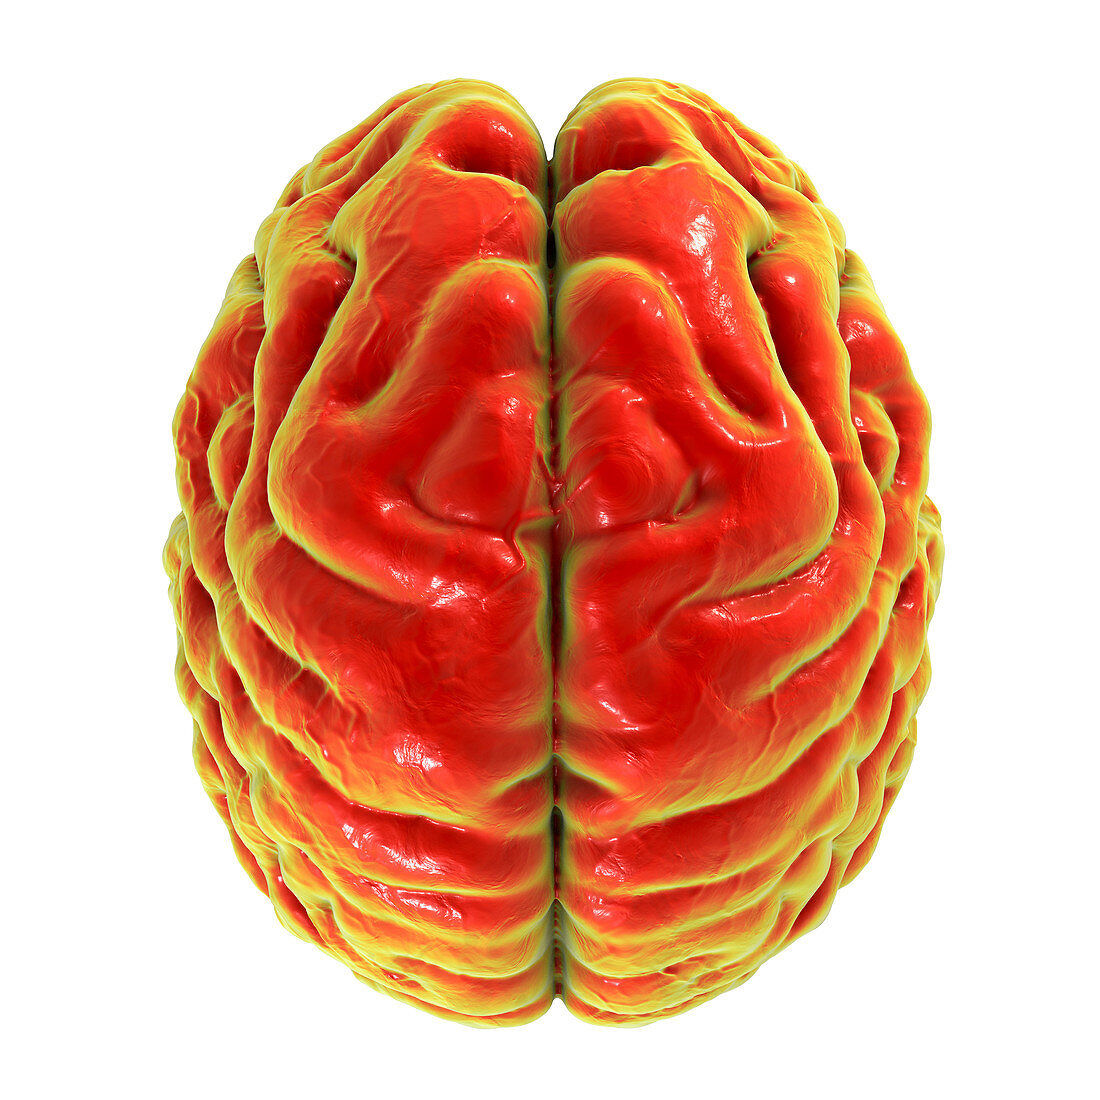 Human brain, computer illustration